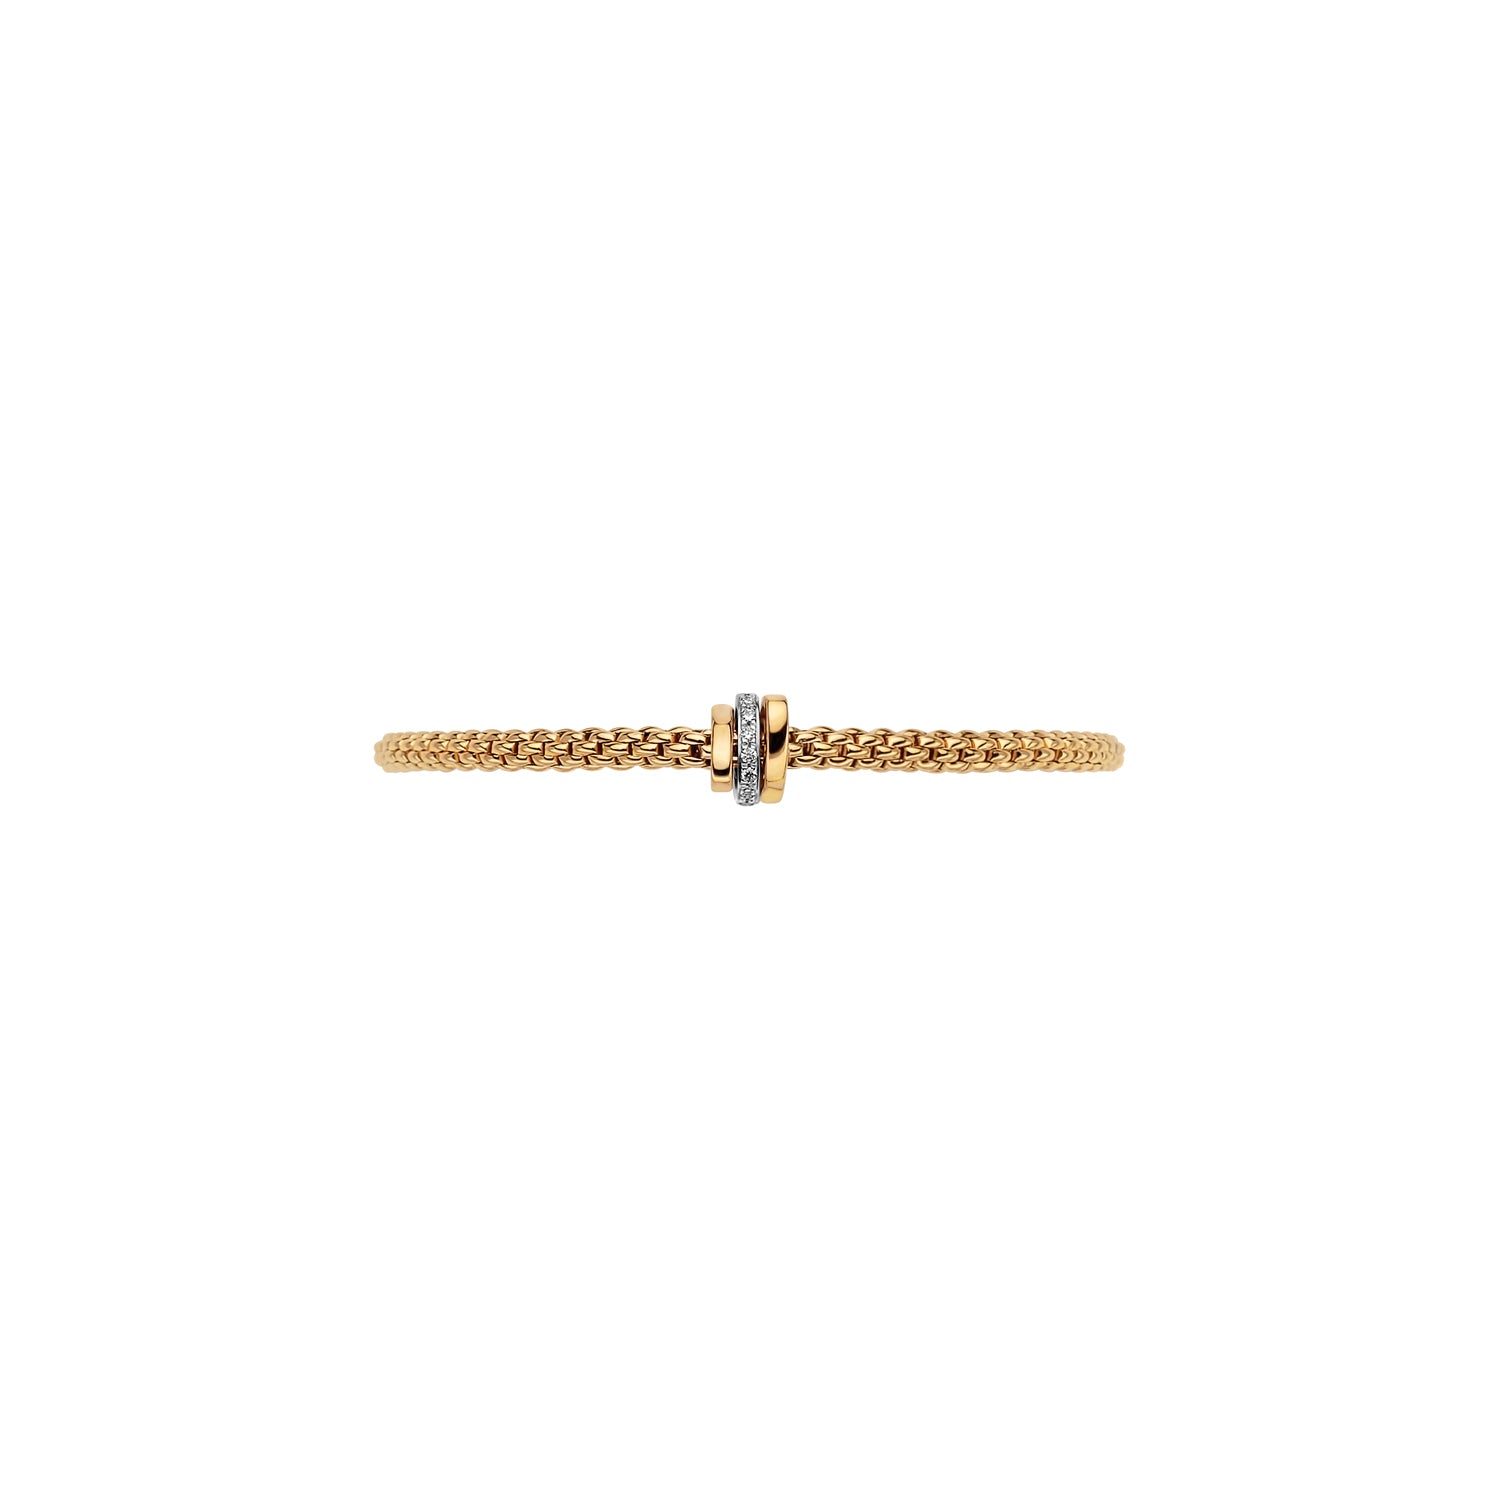 Flex'it Prima bracelet with diamonds in yellow gold